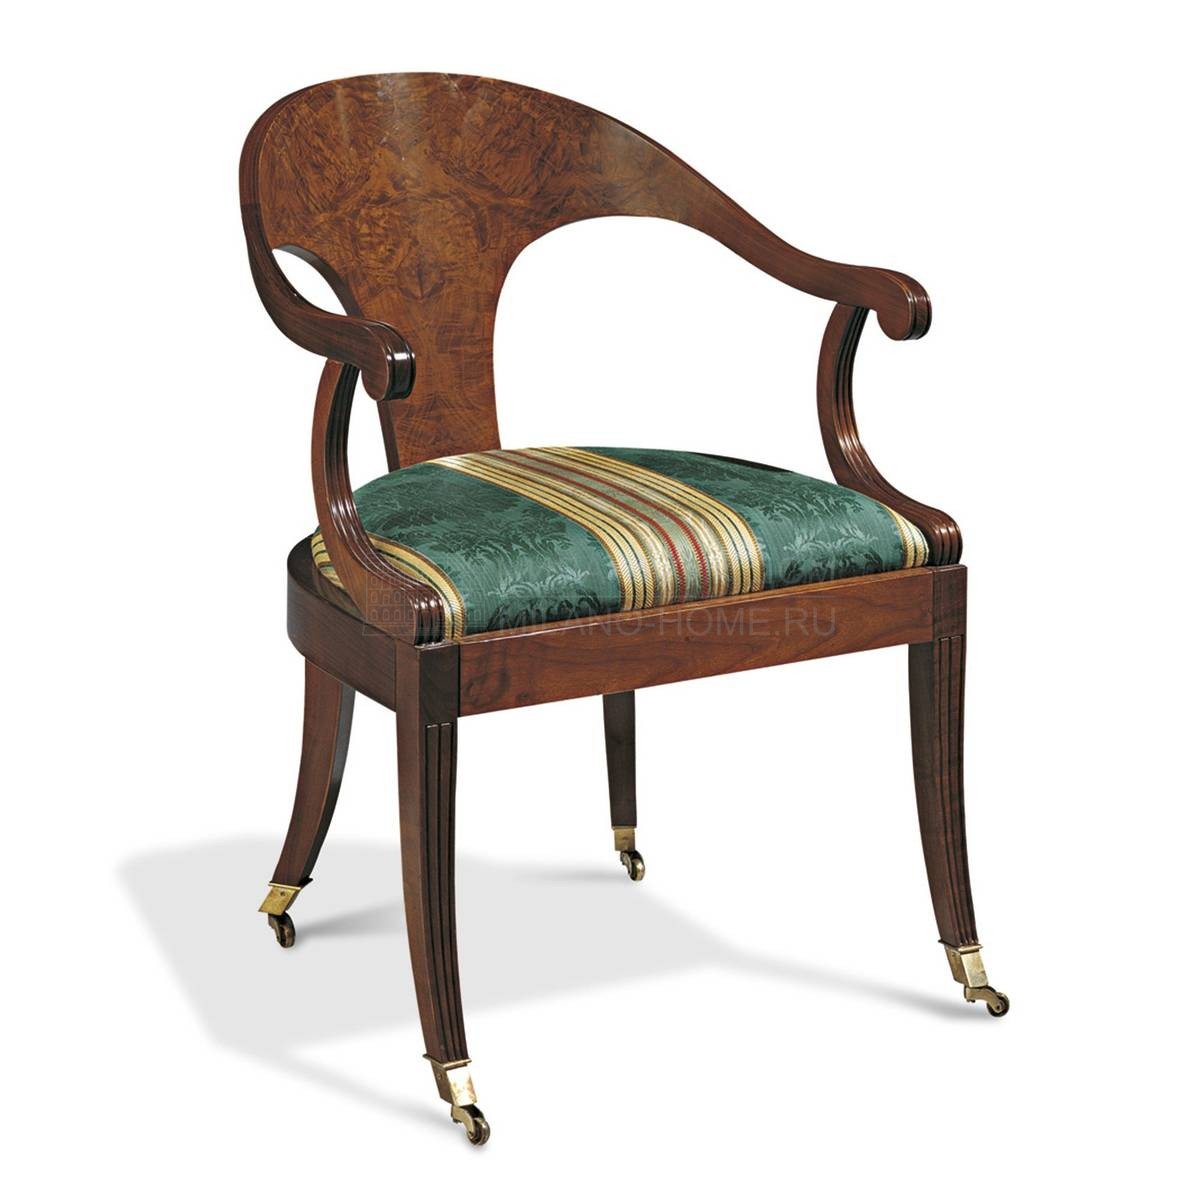 Кресло The Upholstery/P115 из Италии фабрики FRANCESCO MOLON